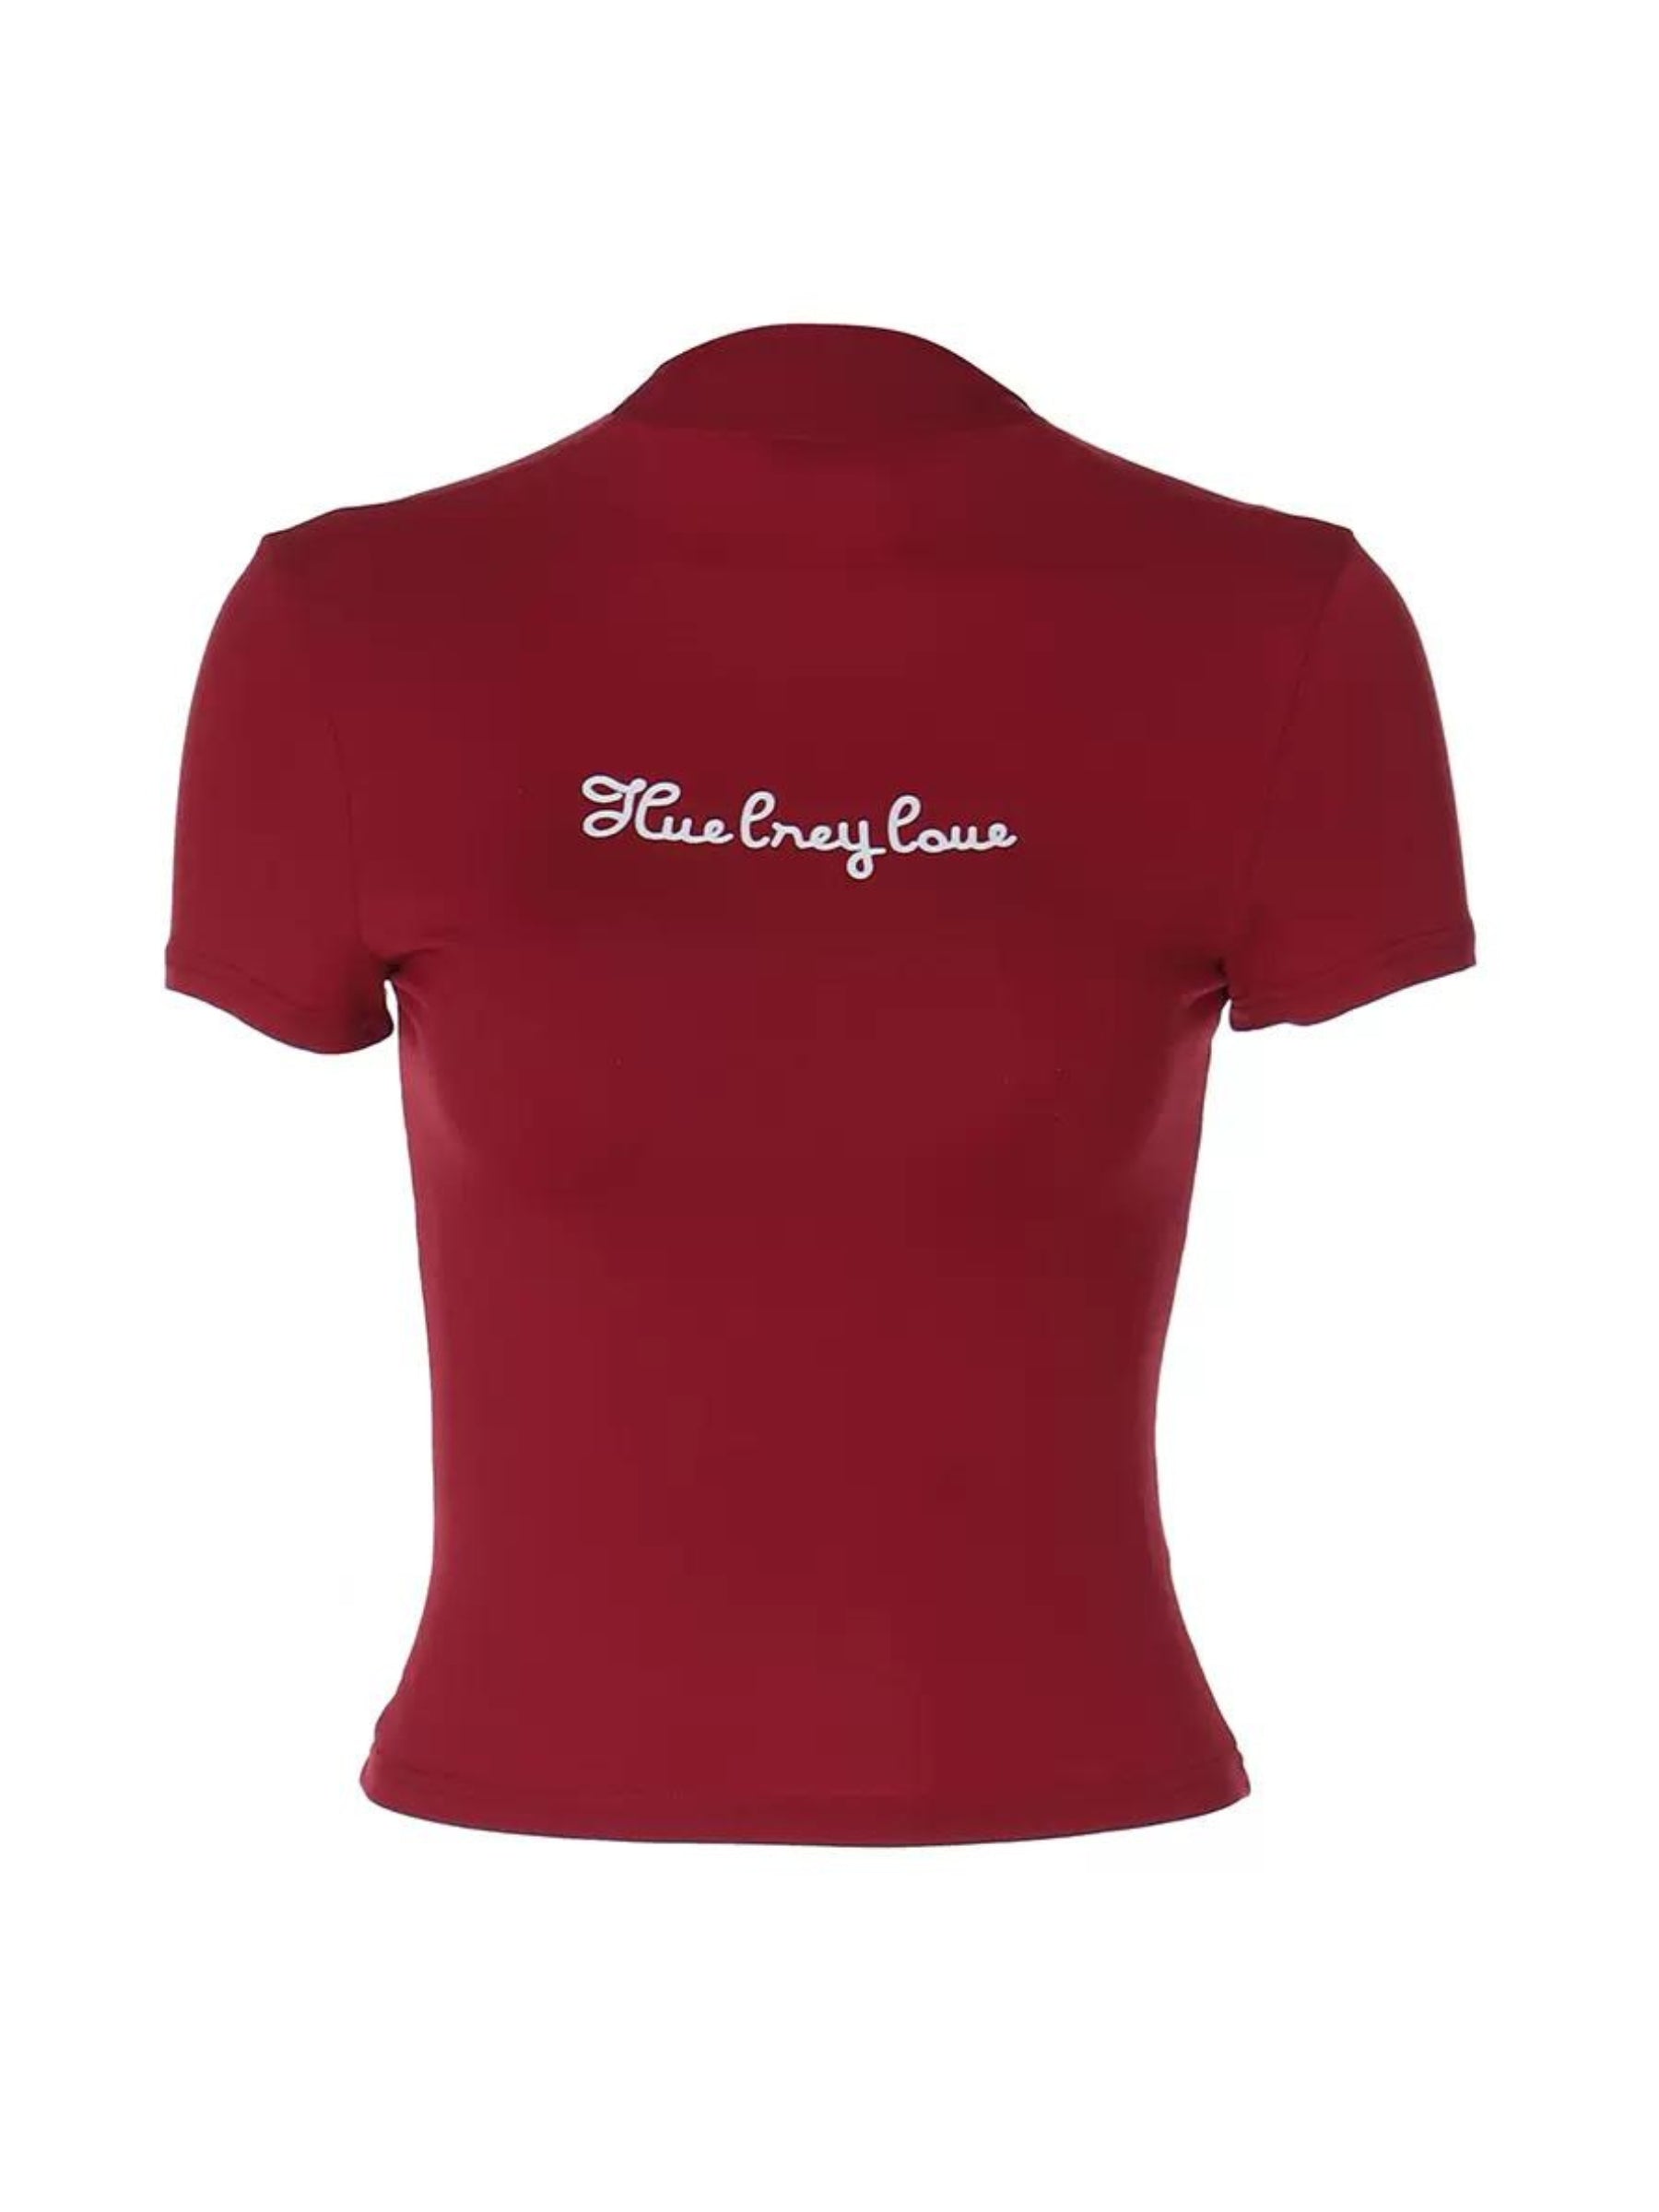 LaPose Fashion - Zoii Letter Print T-Shirt - Basic Tops, Letter Print Tops, Short Sleeve Tops, T-Shirts, Tops